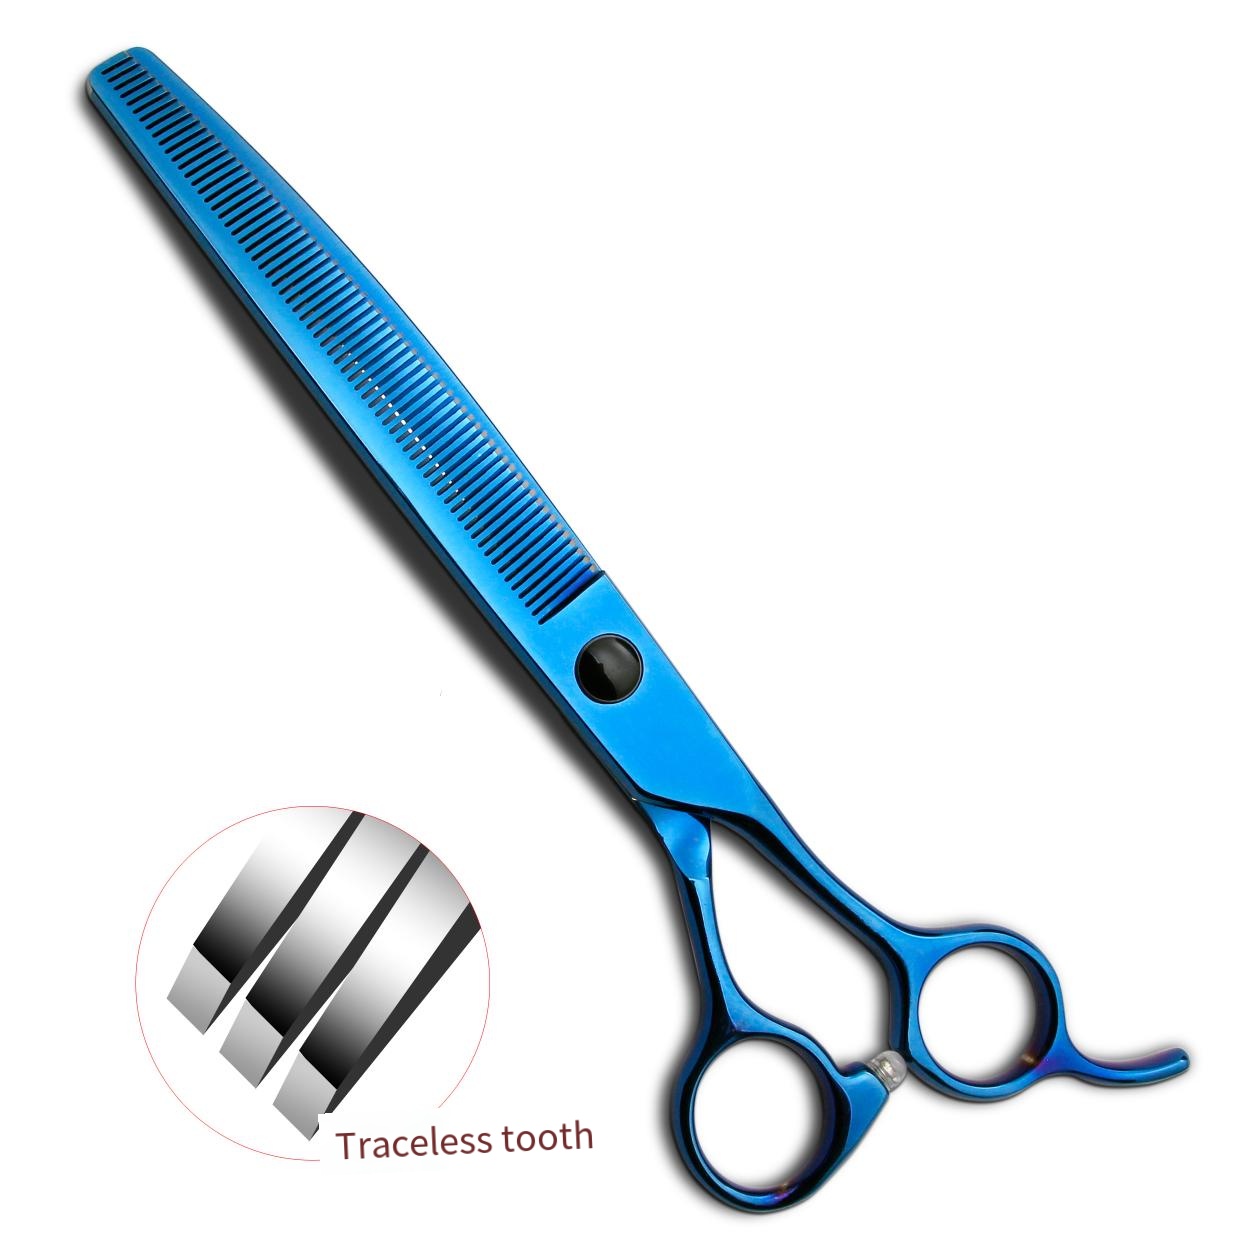 JP 440C Hi-Q 7.5 inch pet grooming curved thinner scissors